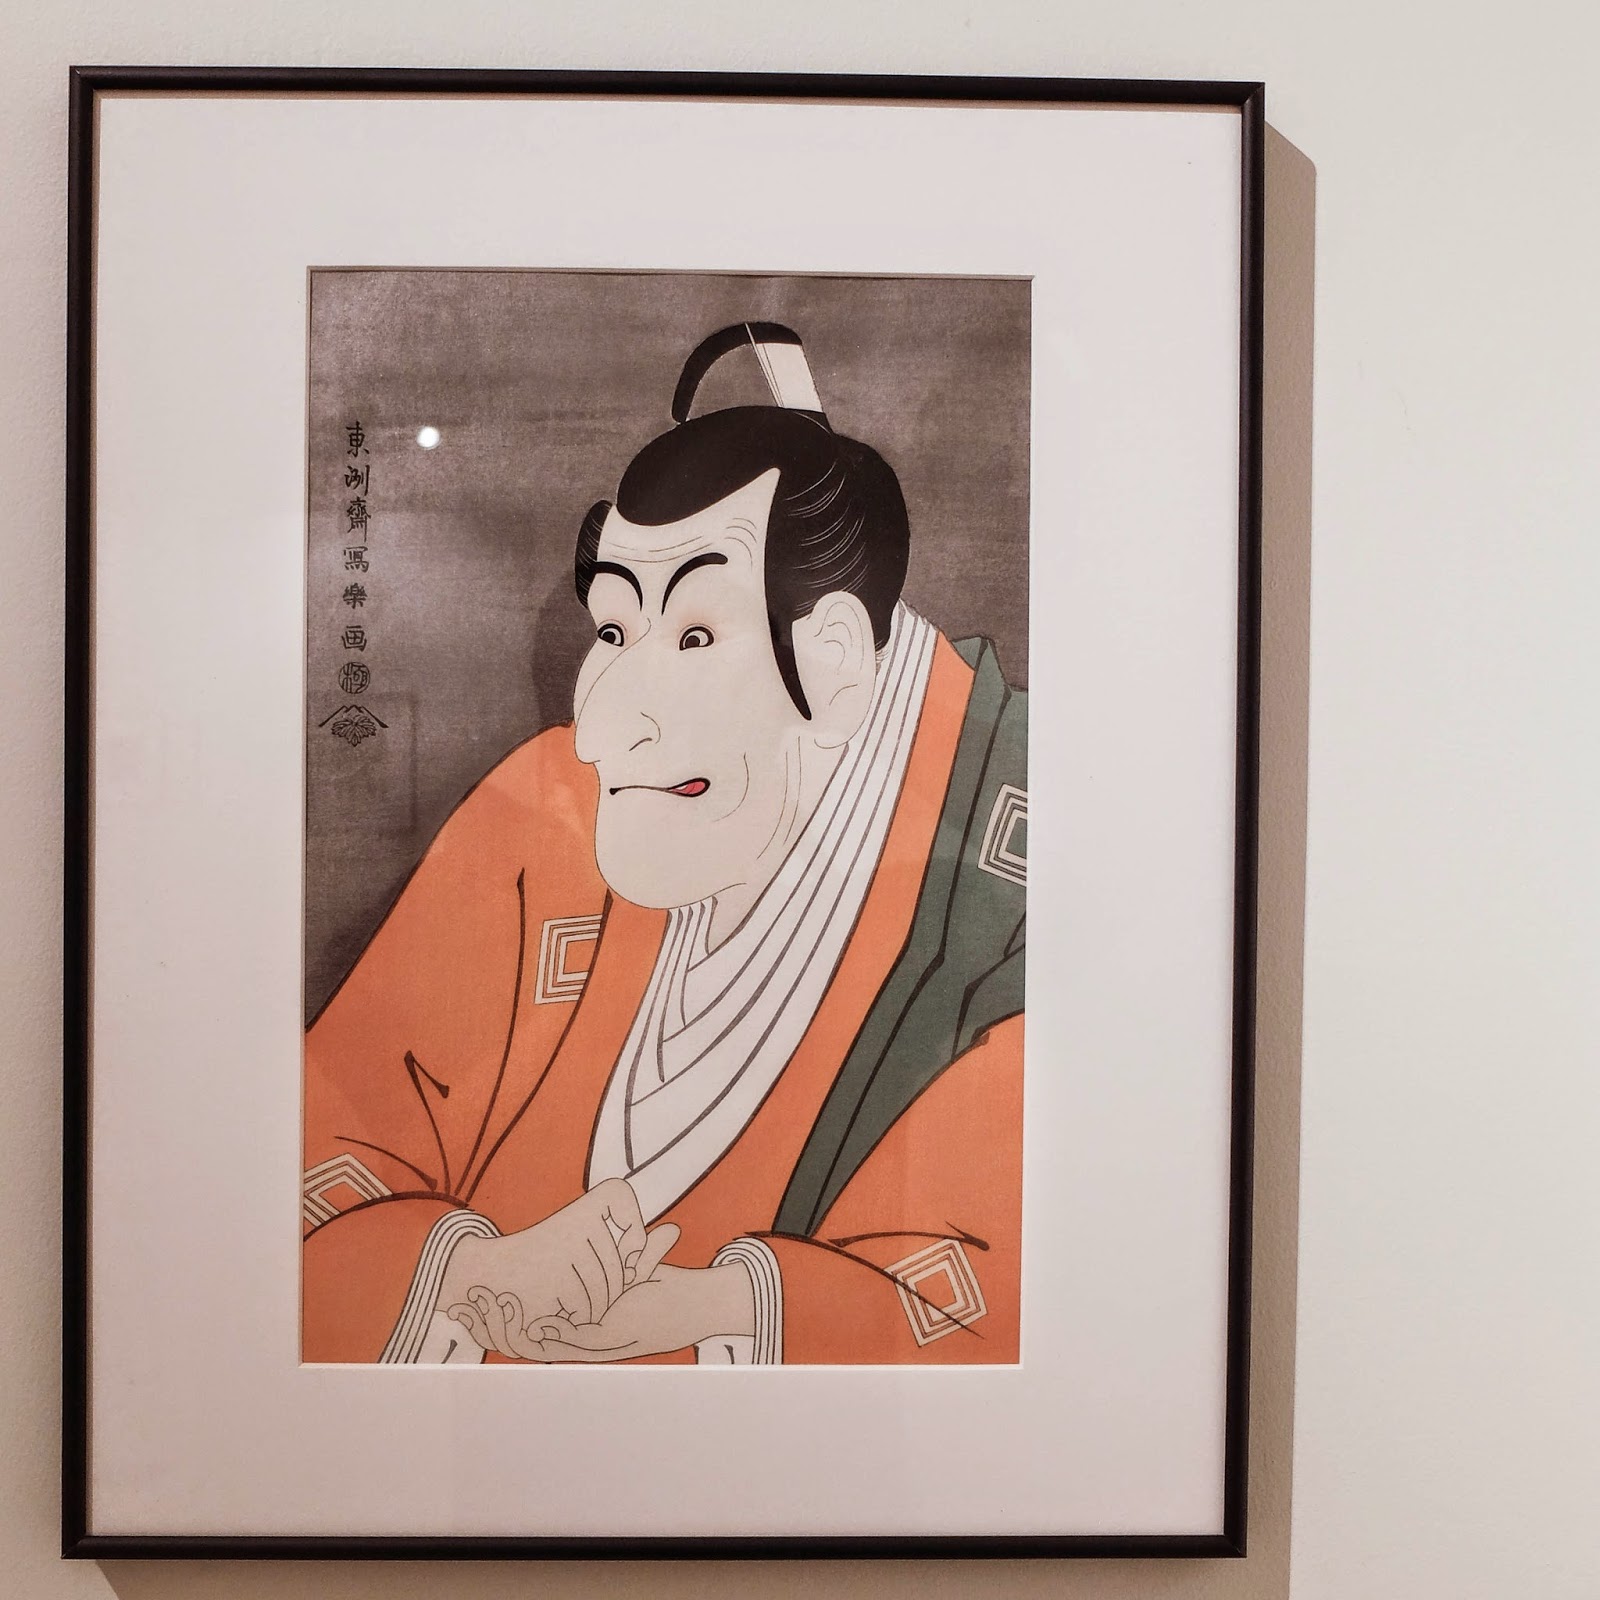 Ukiyoe Portraits exhibit - Ichikawa Ebizo by Sharaku Toshusai